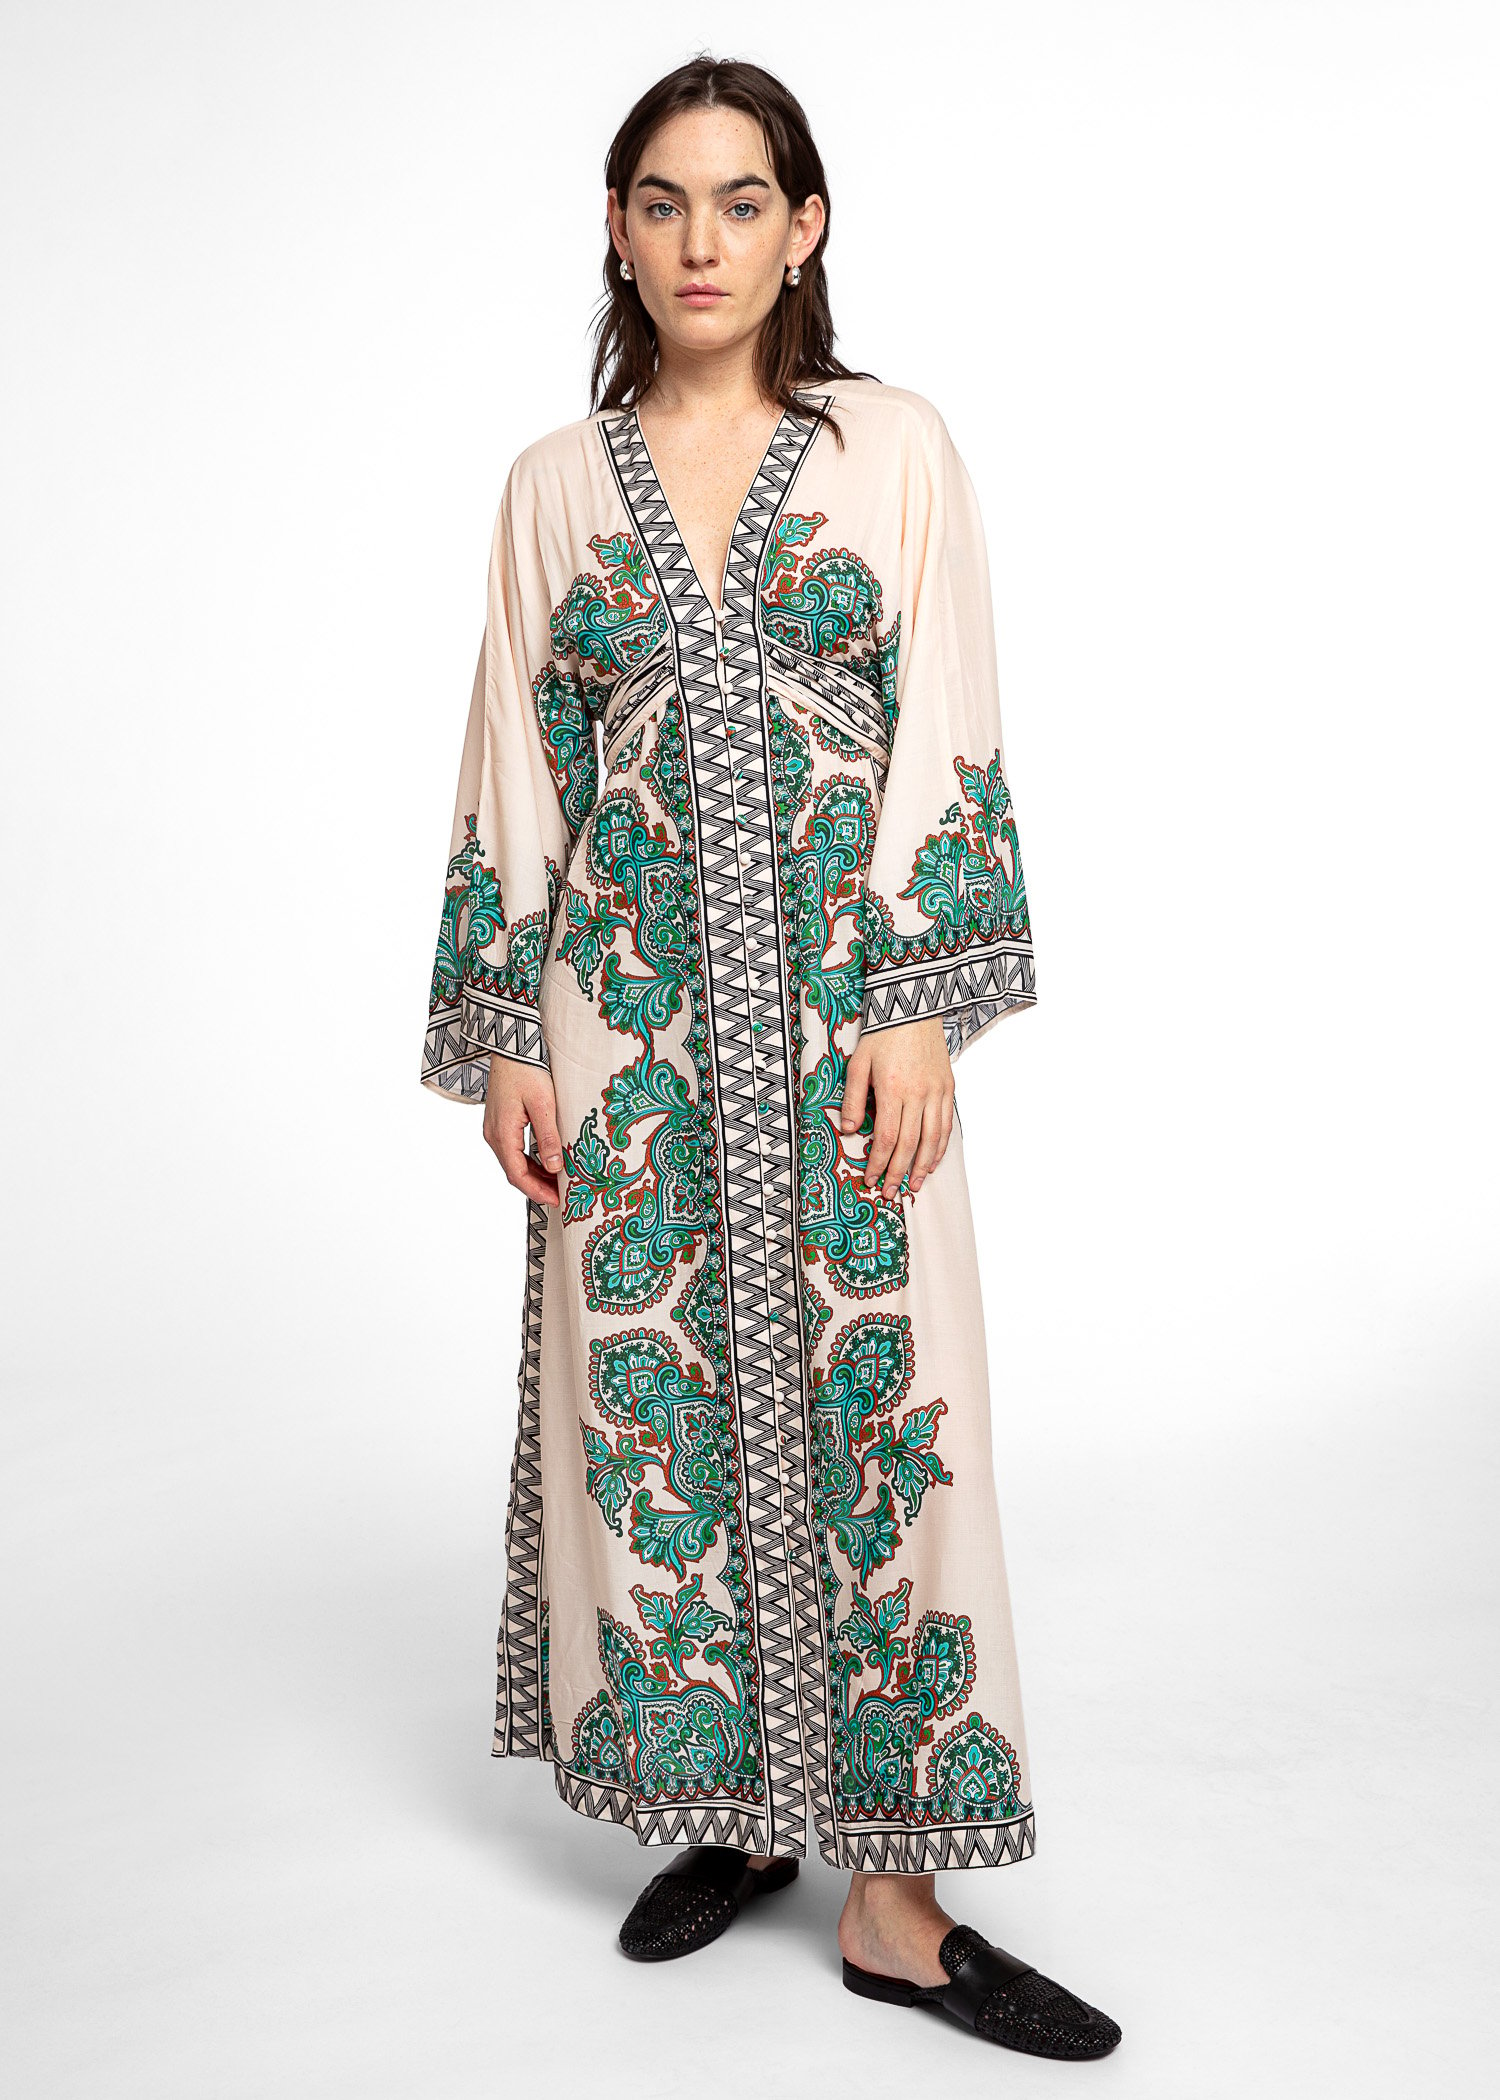 Paisley patterned dress